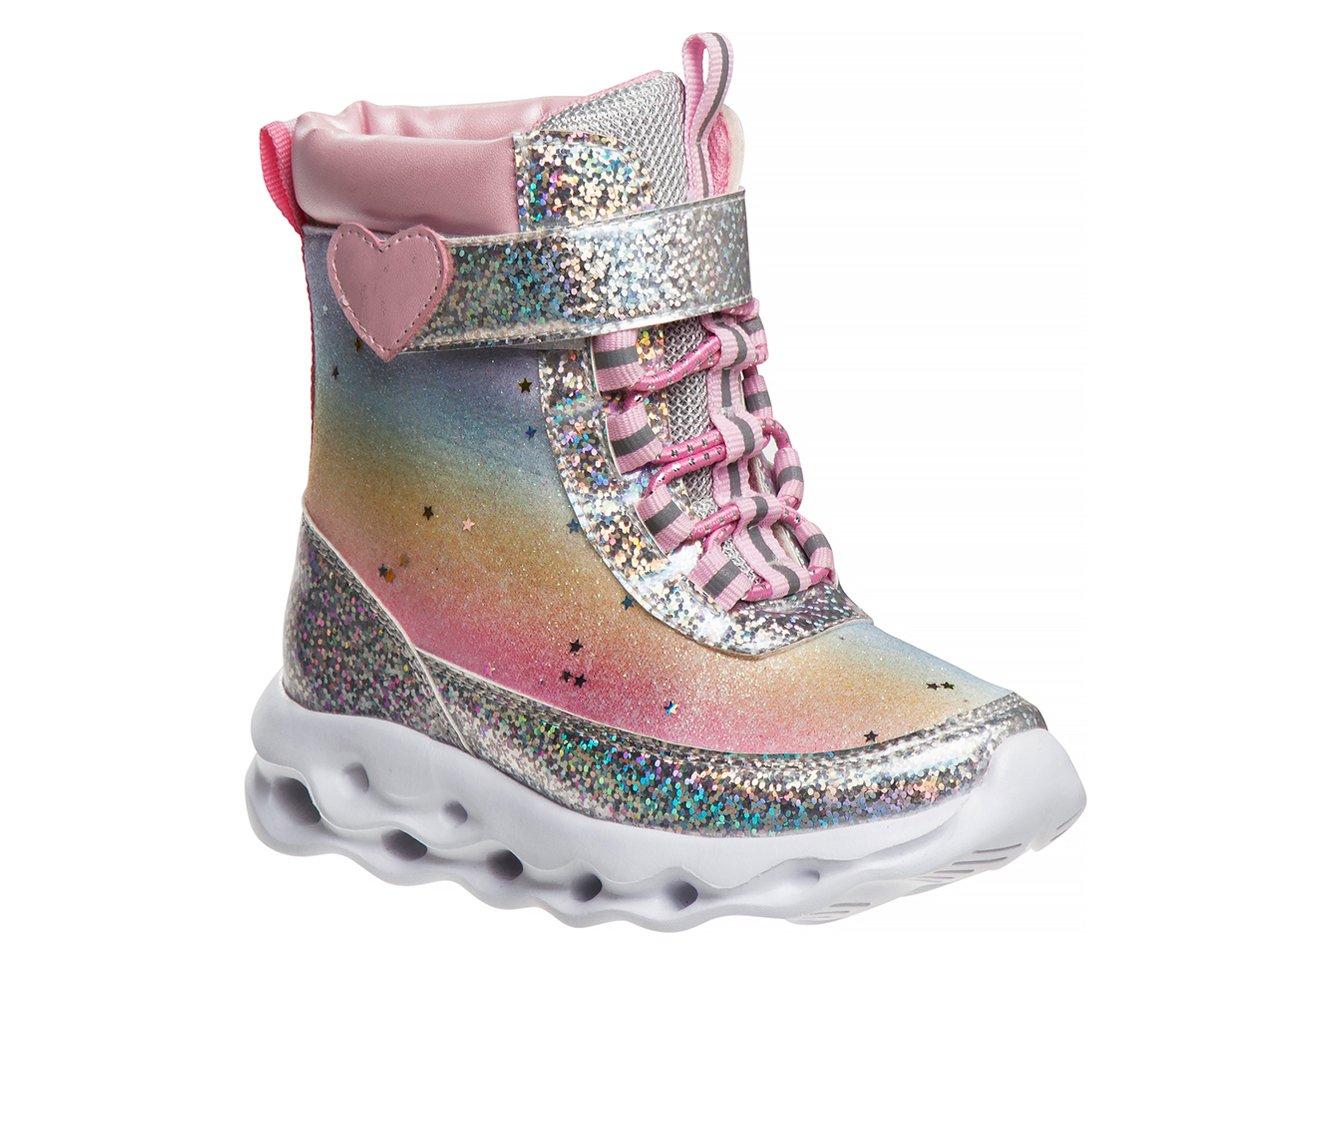 Girls' Laura Ashley Toddler & Little Kid Loraine Snow Boots